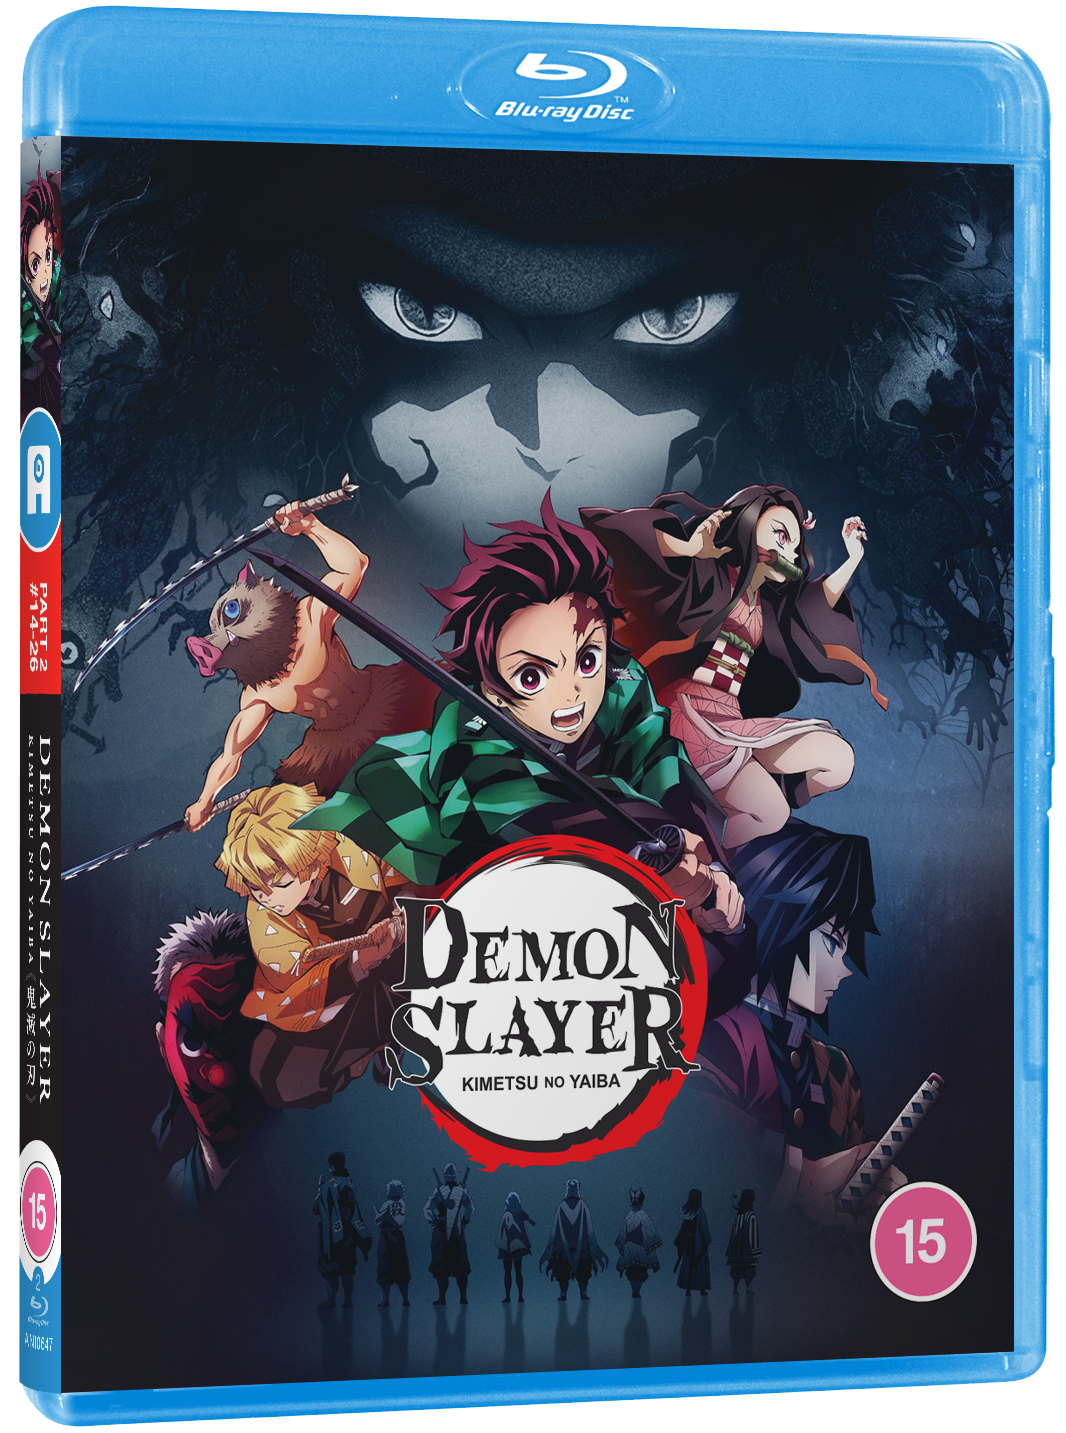 Demon Slayer: Kimetsu no Yaiba Episode 15: The Demon Slayers are